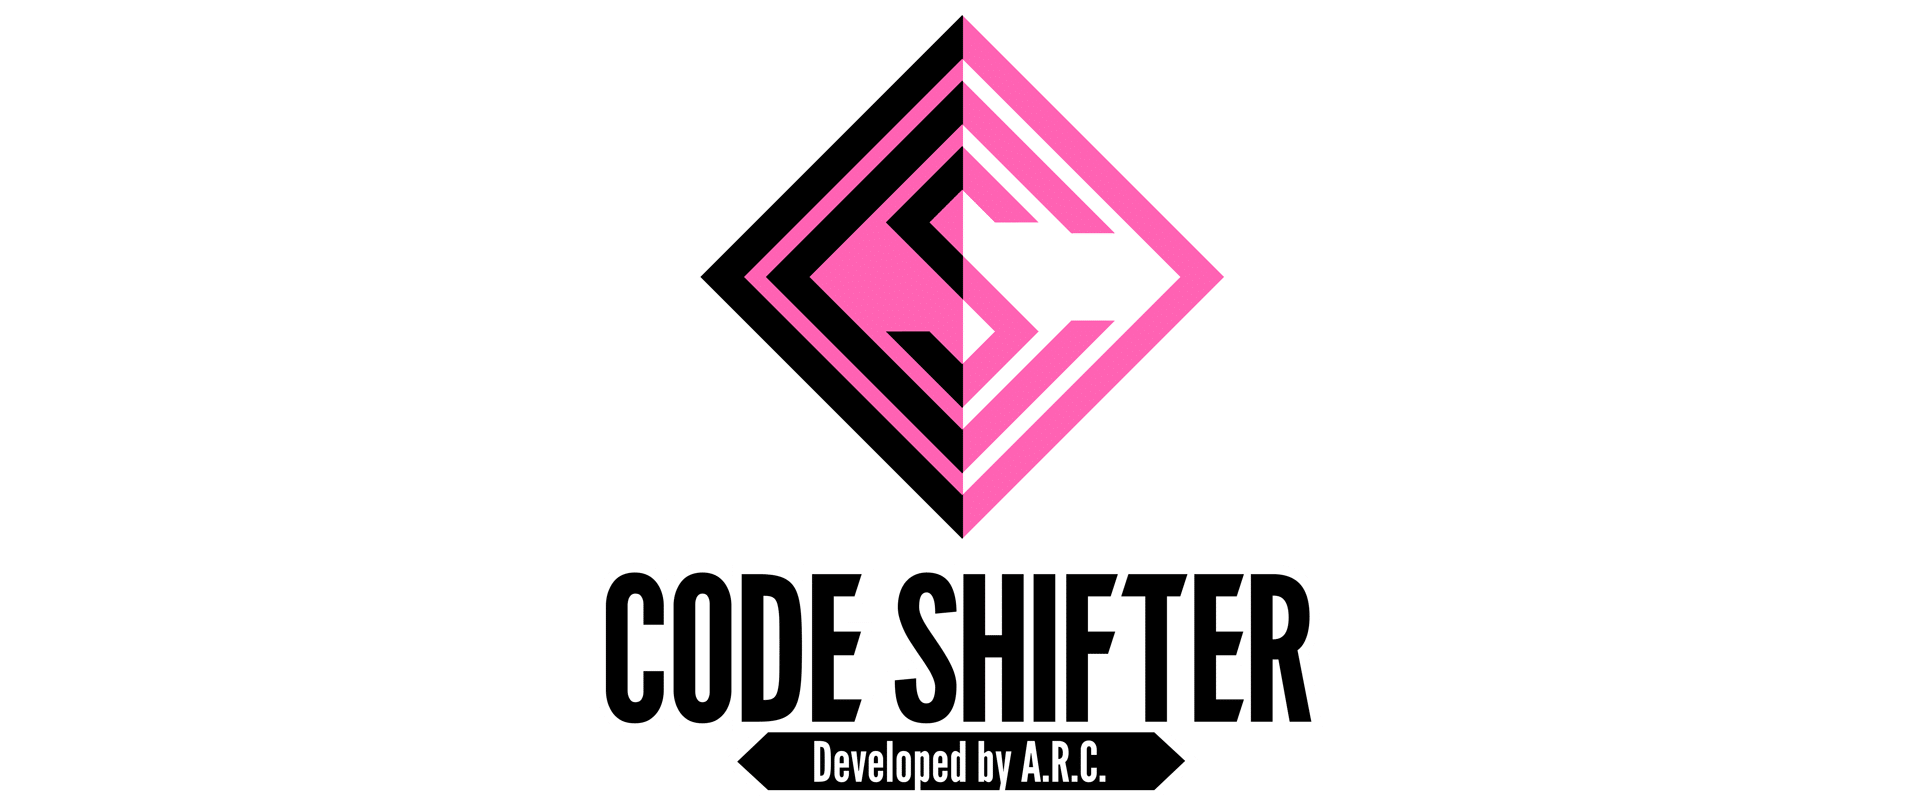 code shifter